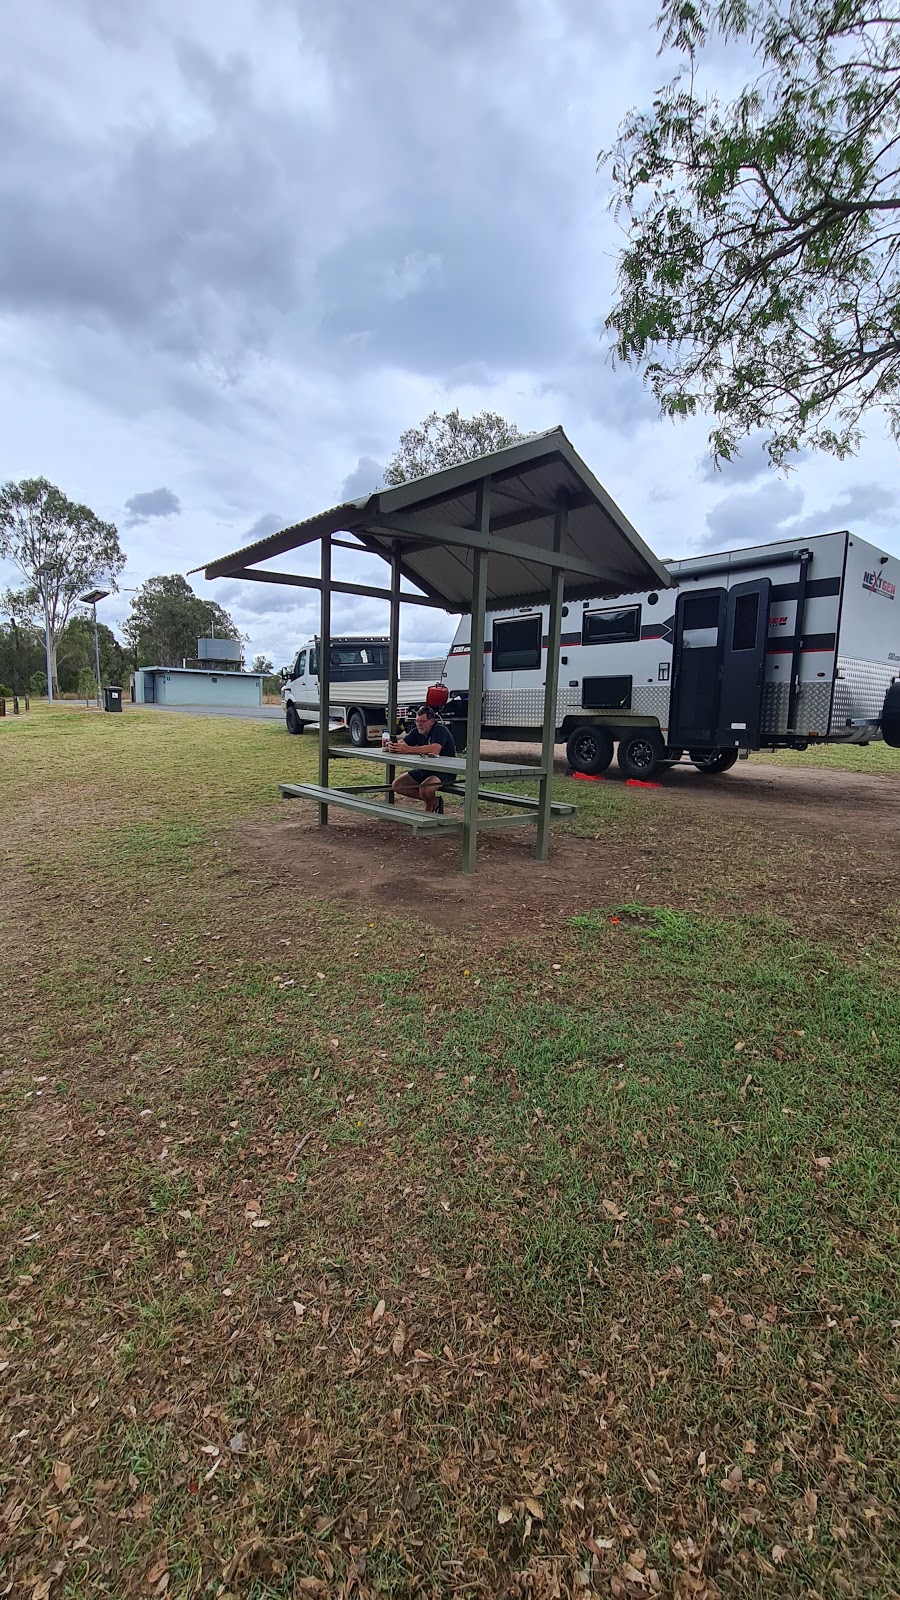 Fat Hen Park | Fat Hen Creek Rest Area Access, Kilkivan QLD 4600, Australia